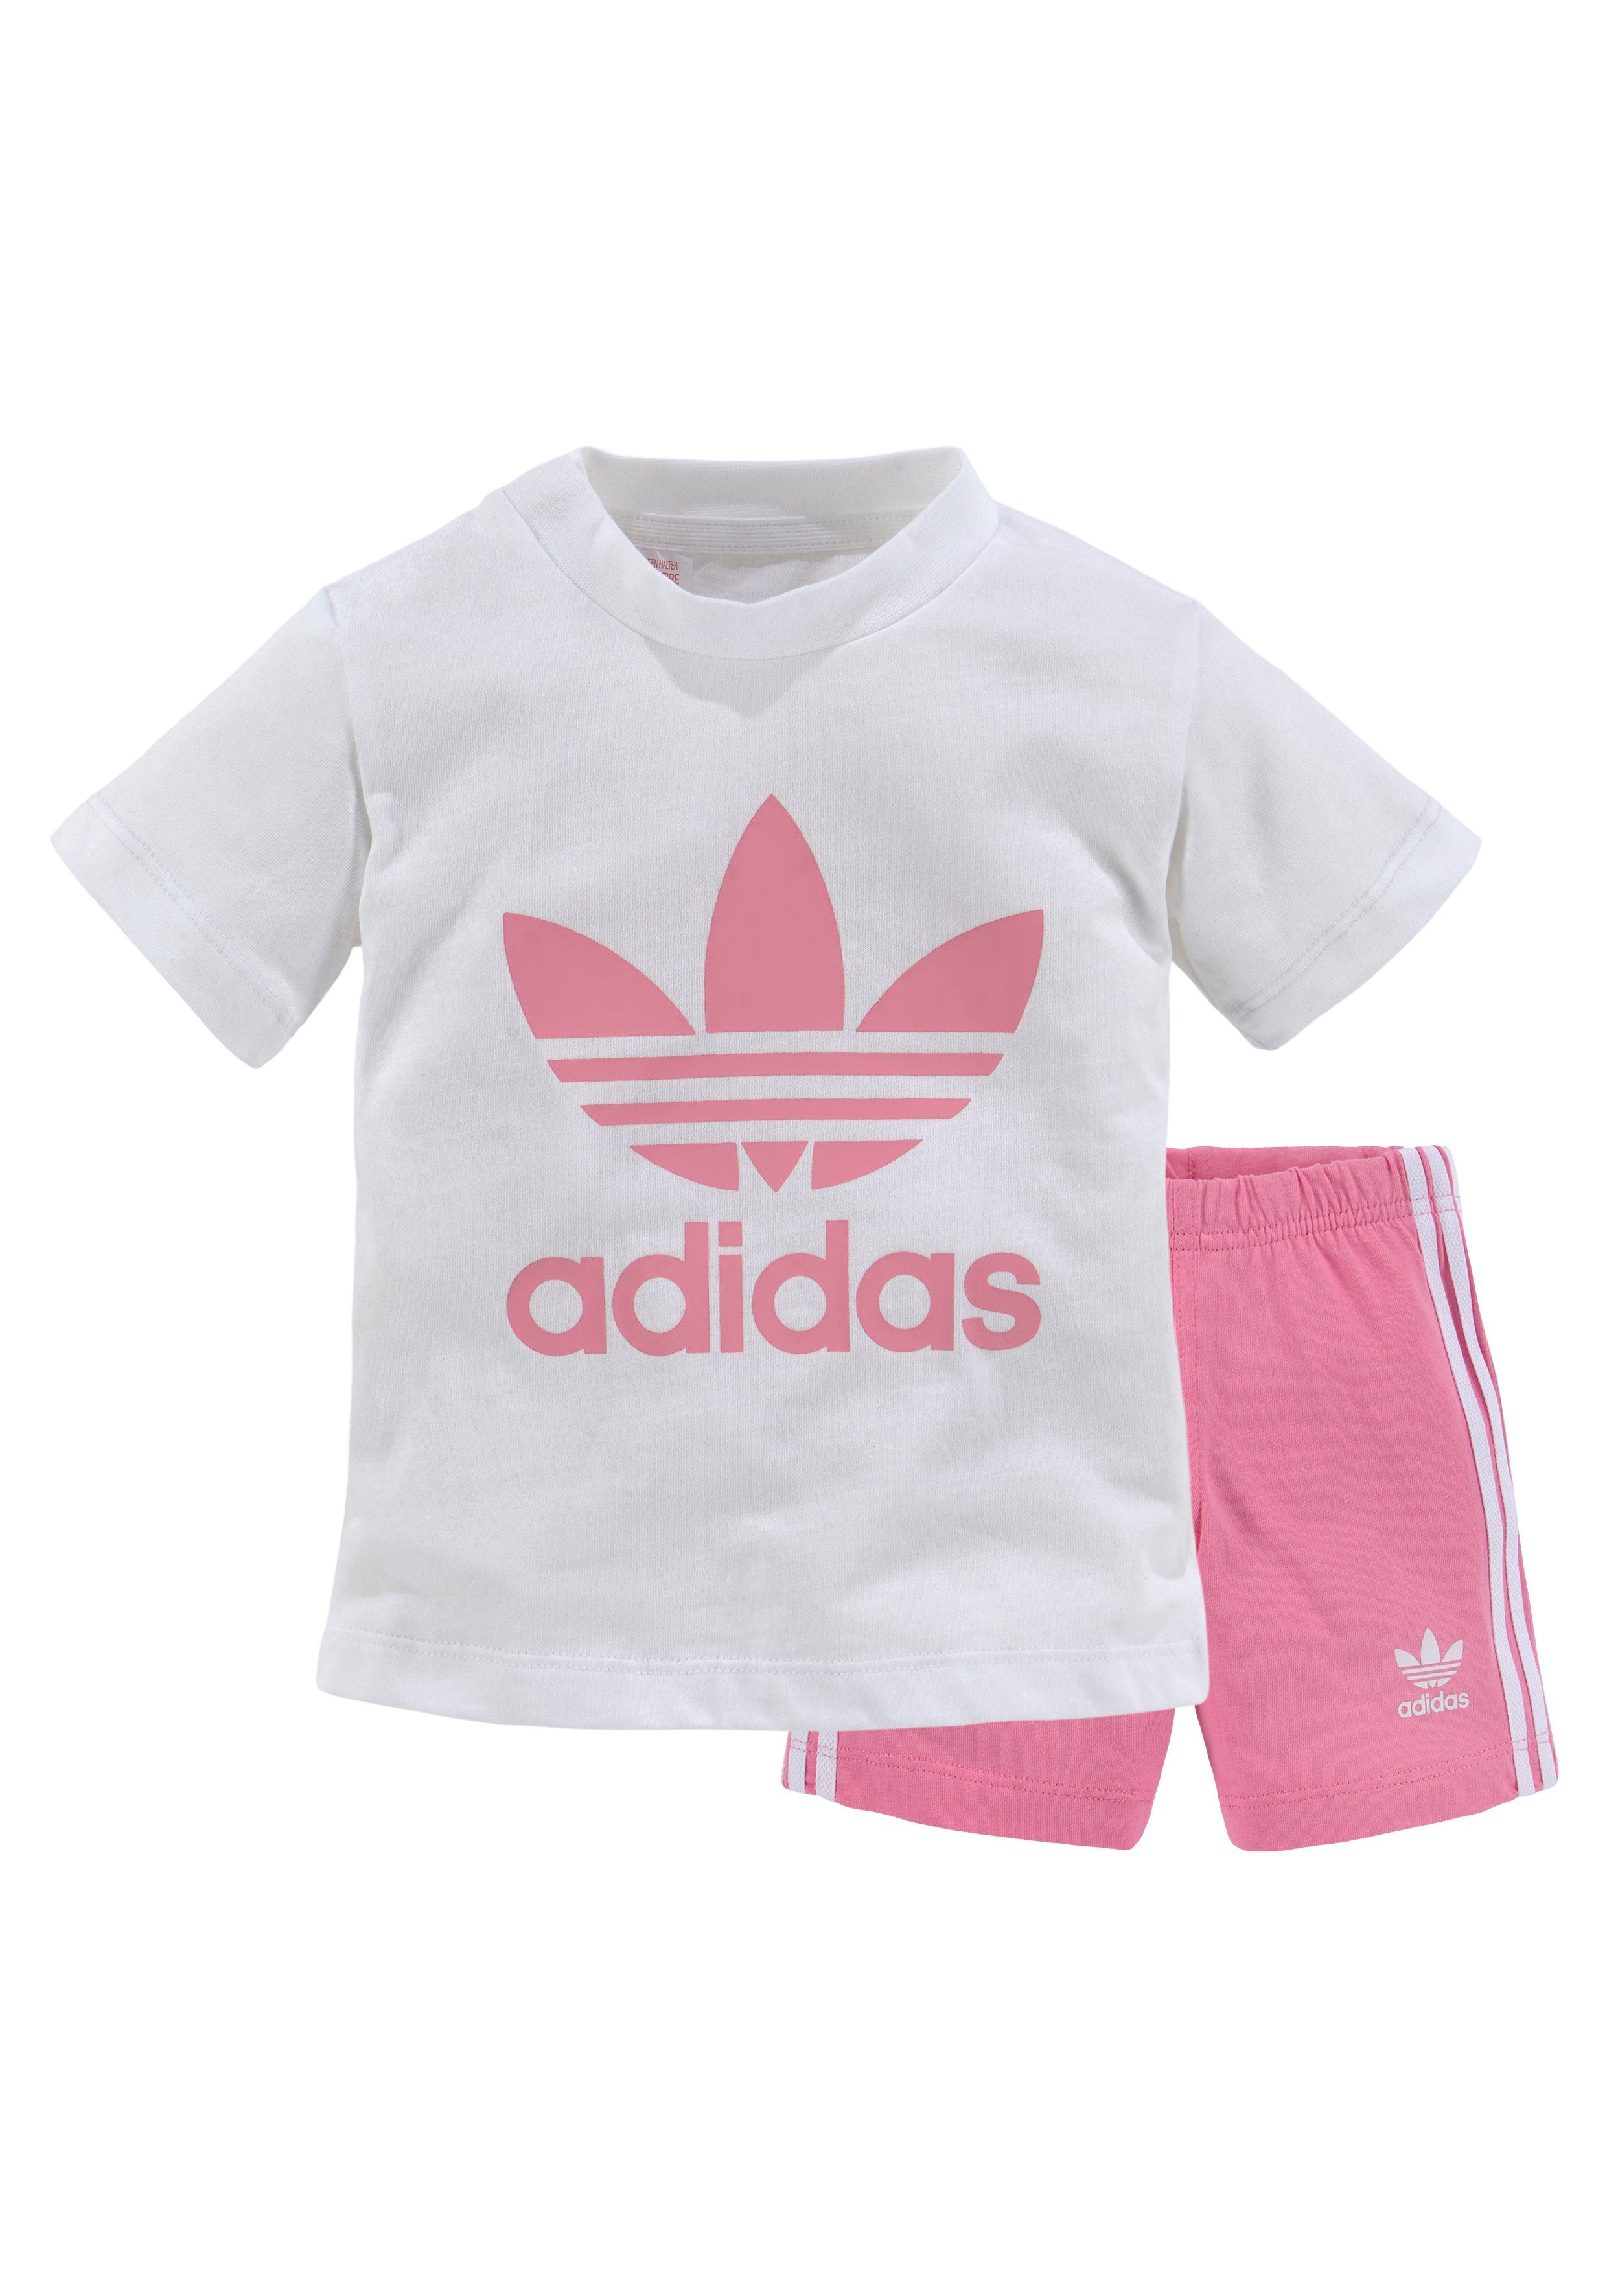 adidas Pink SHORTS UND SET Originals TREFOIL T-Shirt Shorts White & (Set) / Bliss